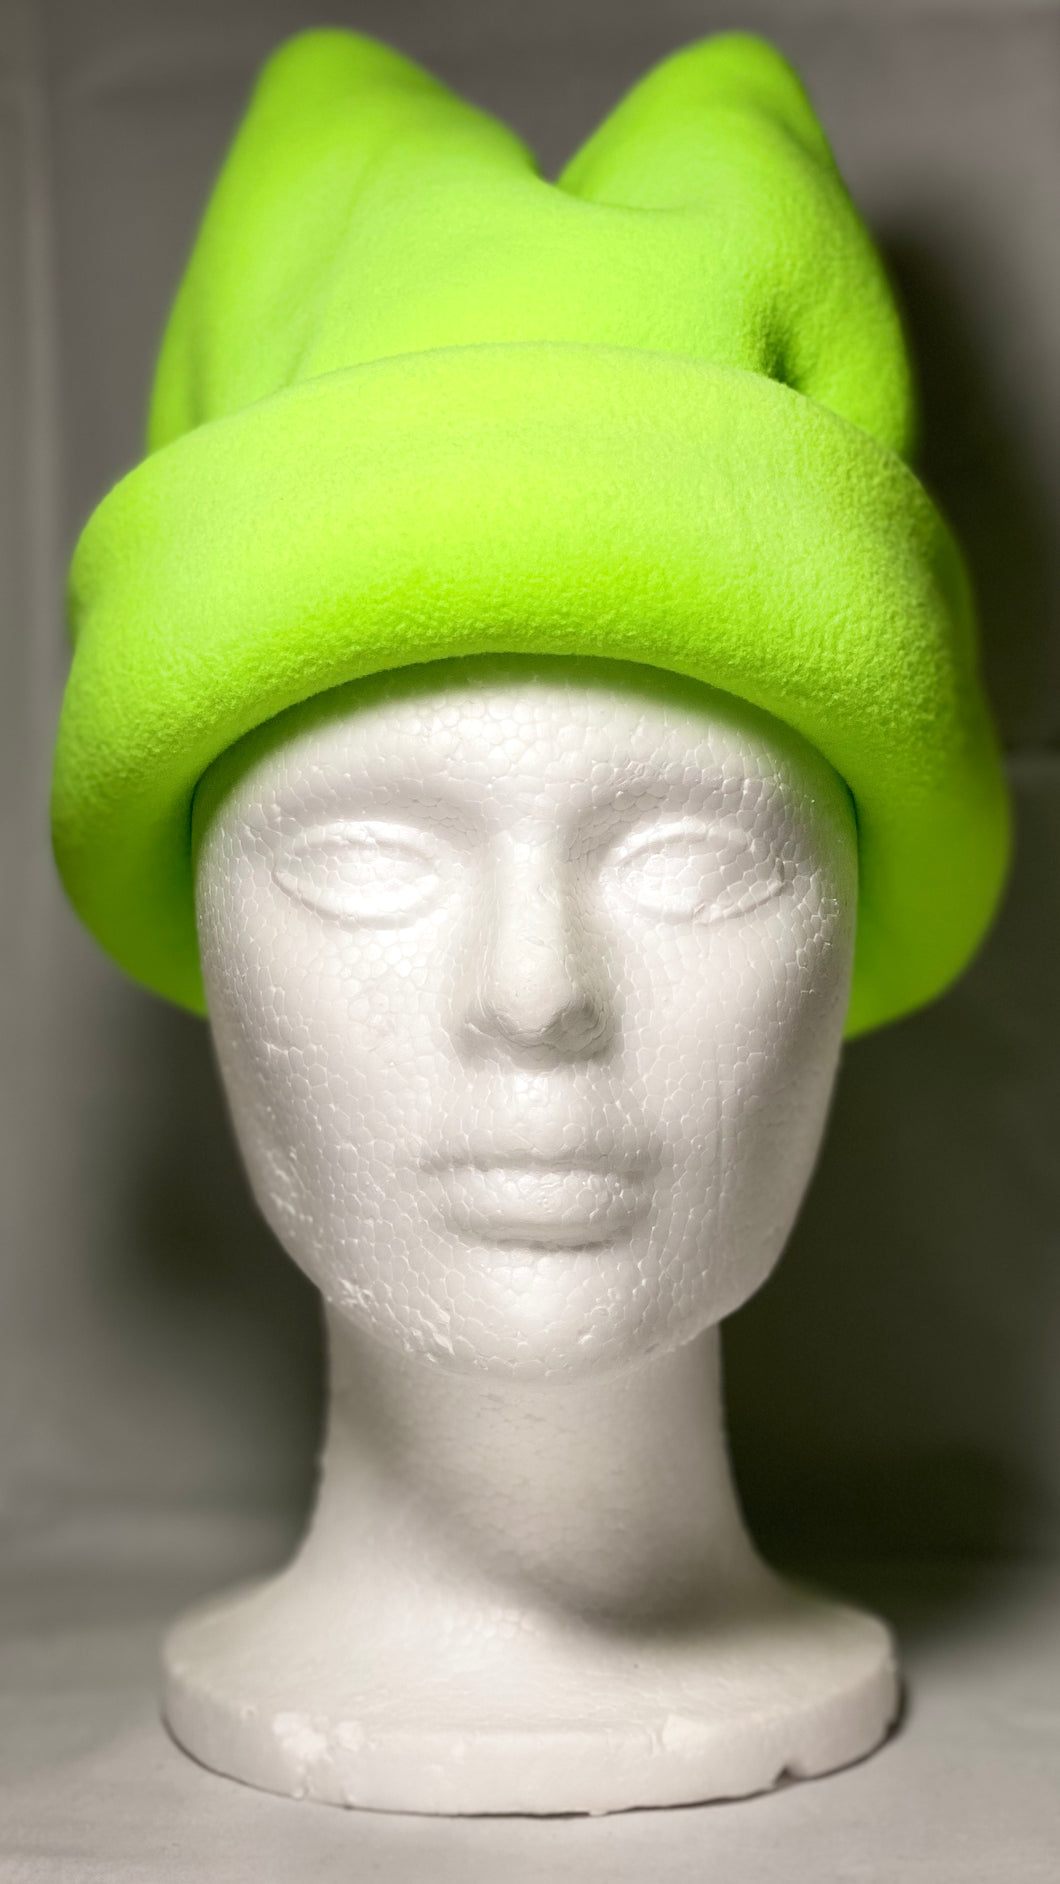 Lime Green Fleece Hat